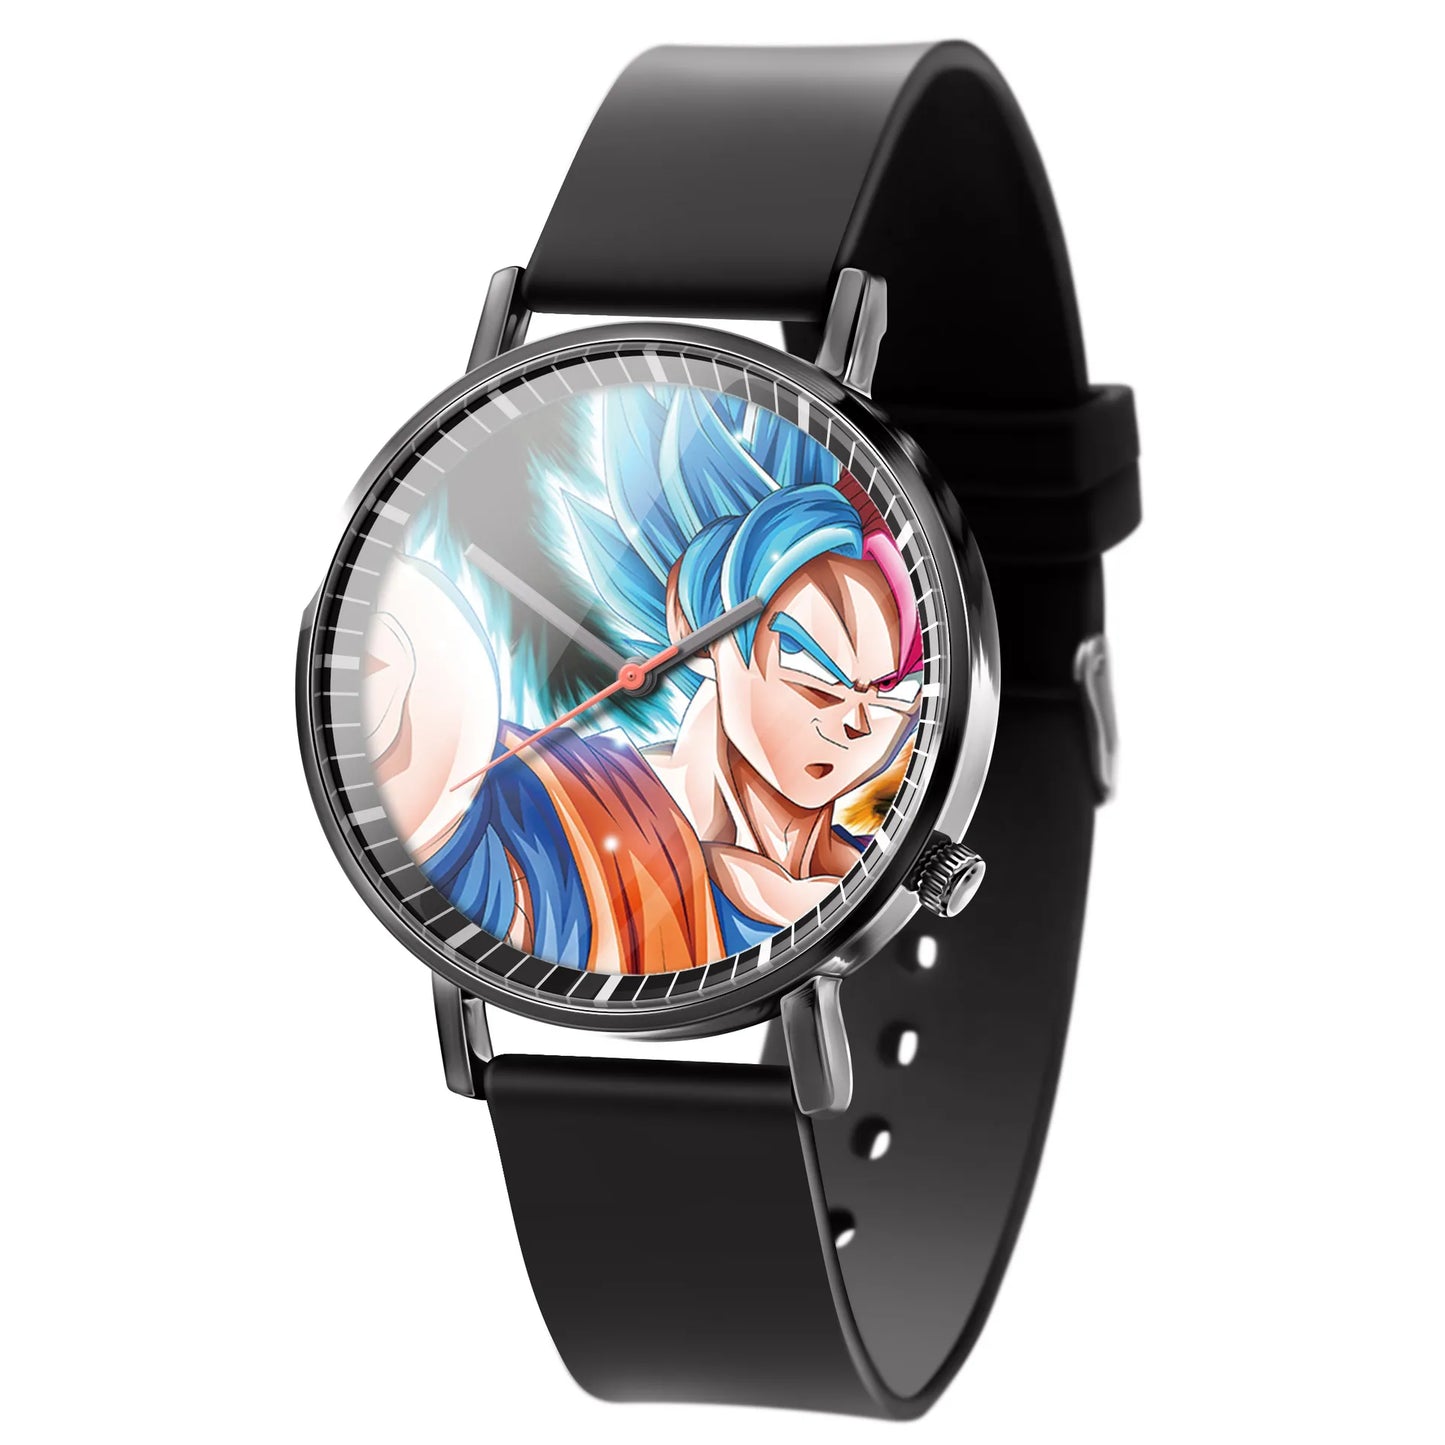 Dragon Ball Z Watch Goku Saiyans Wristwatch Leather Printing Watch Cartoon Anime Quartz Electronic Watch Toy Birthday Party Gift-Dragon ball-3-